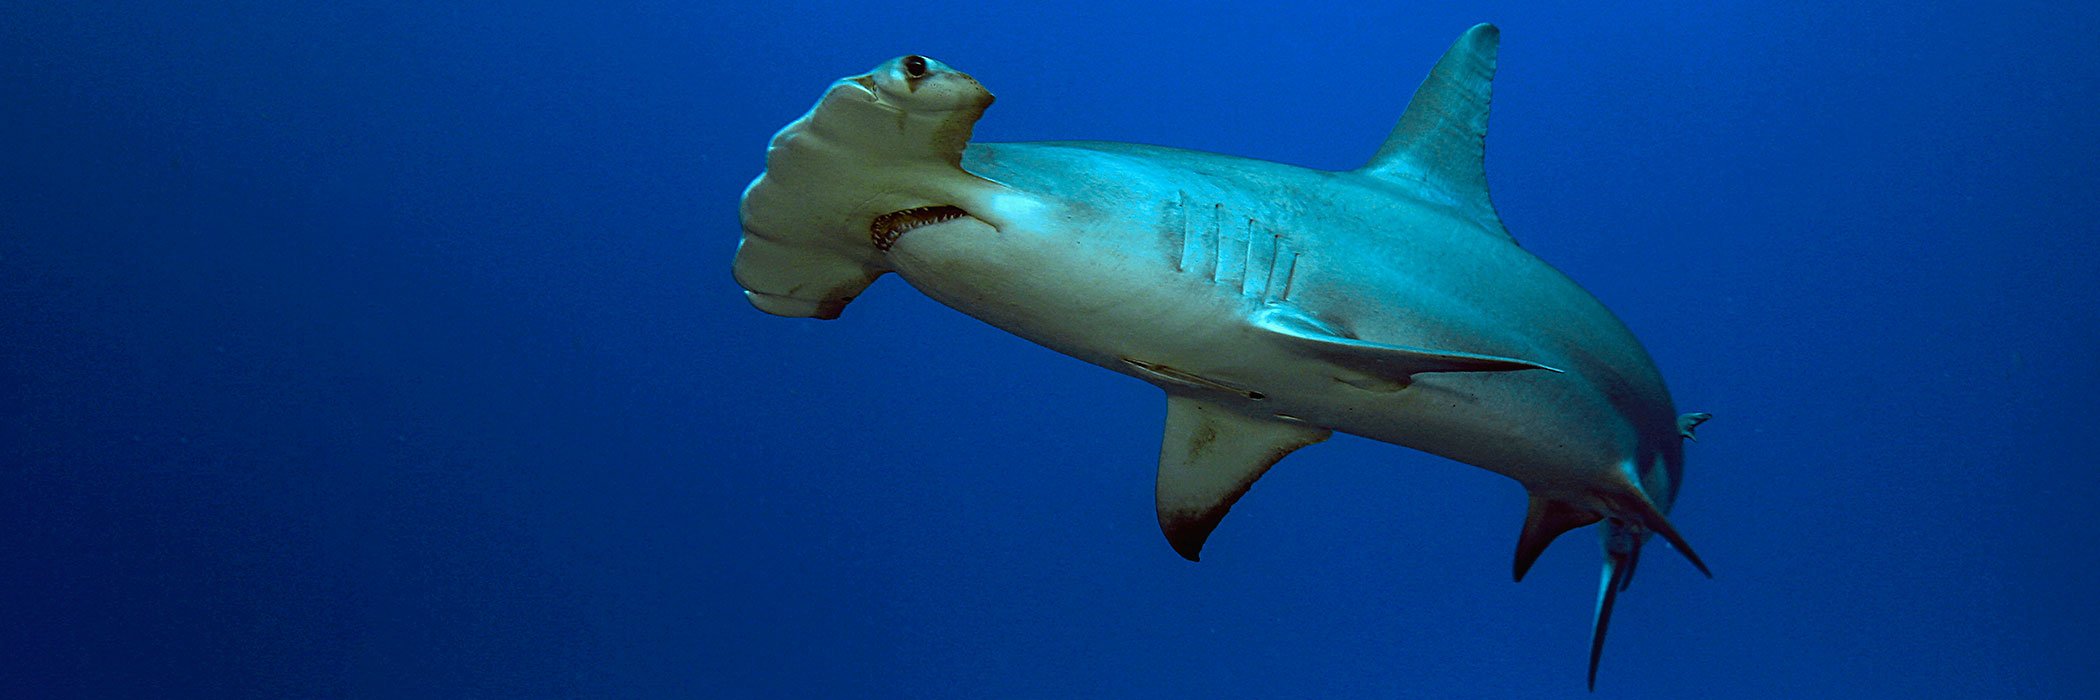 Great hammerhead shark, Bahamas Bank